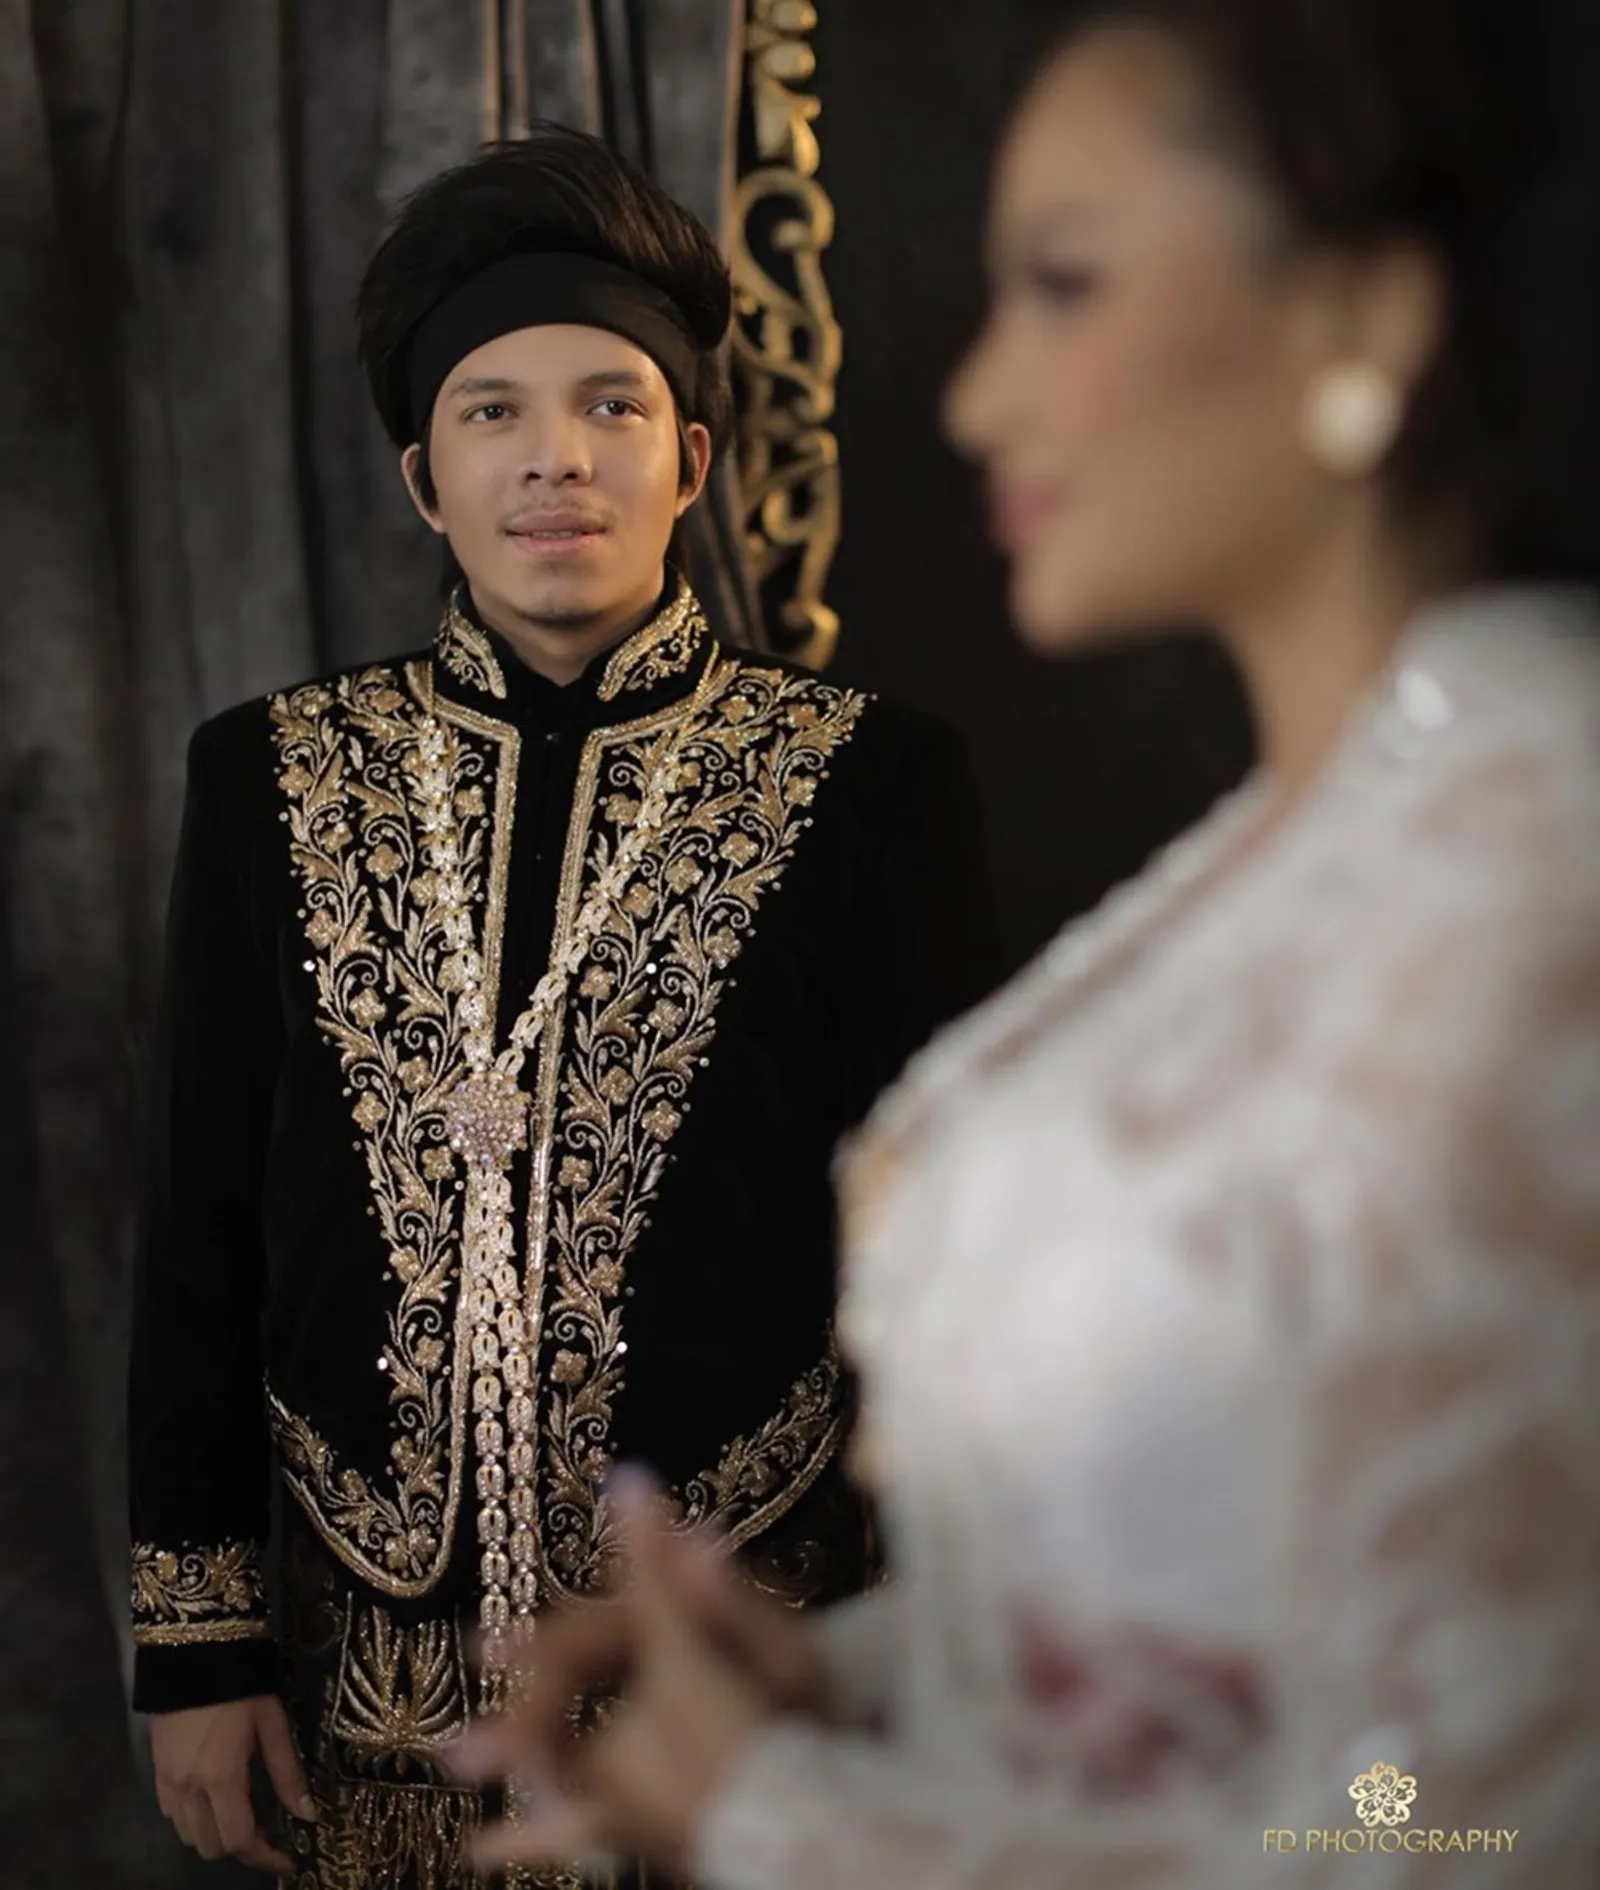 9 Foto Romantis Atta Halilintar & Aurel Hermansyah a la Pengantin Jawa